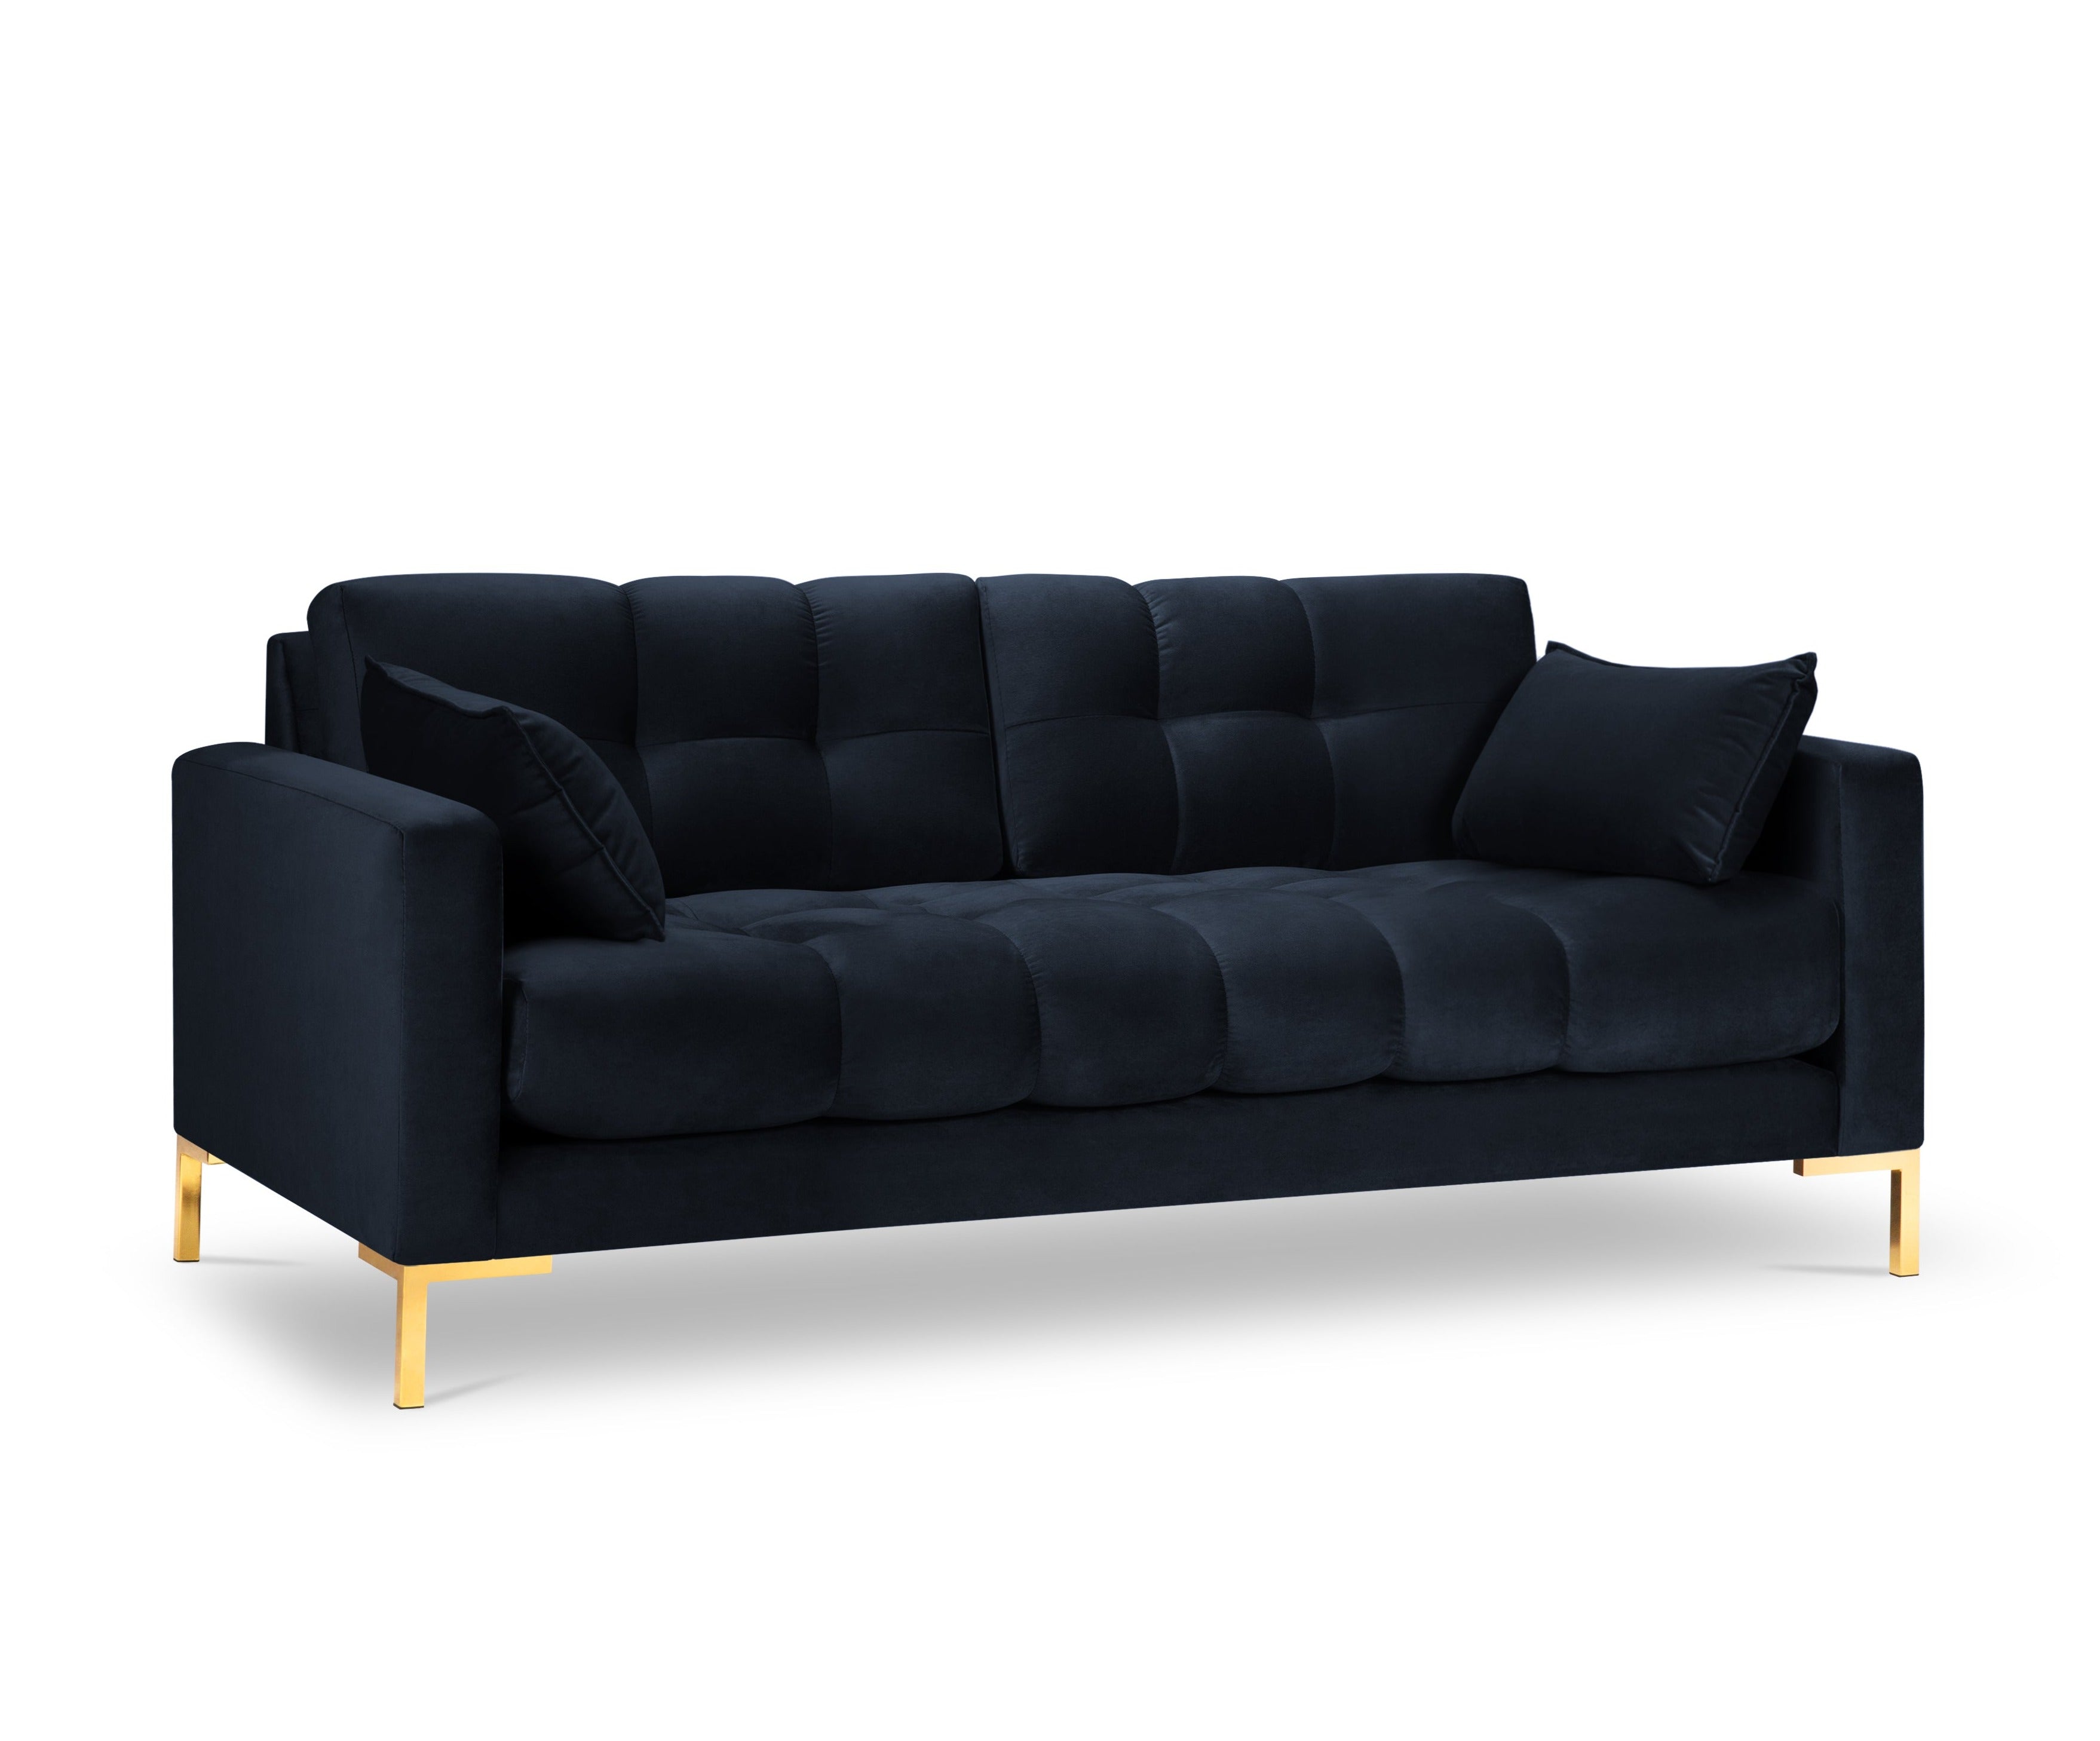 Dark blue sofa with a golden base